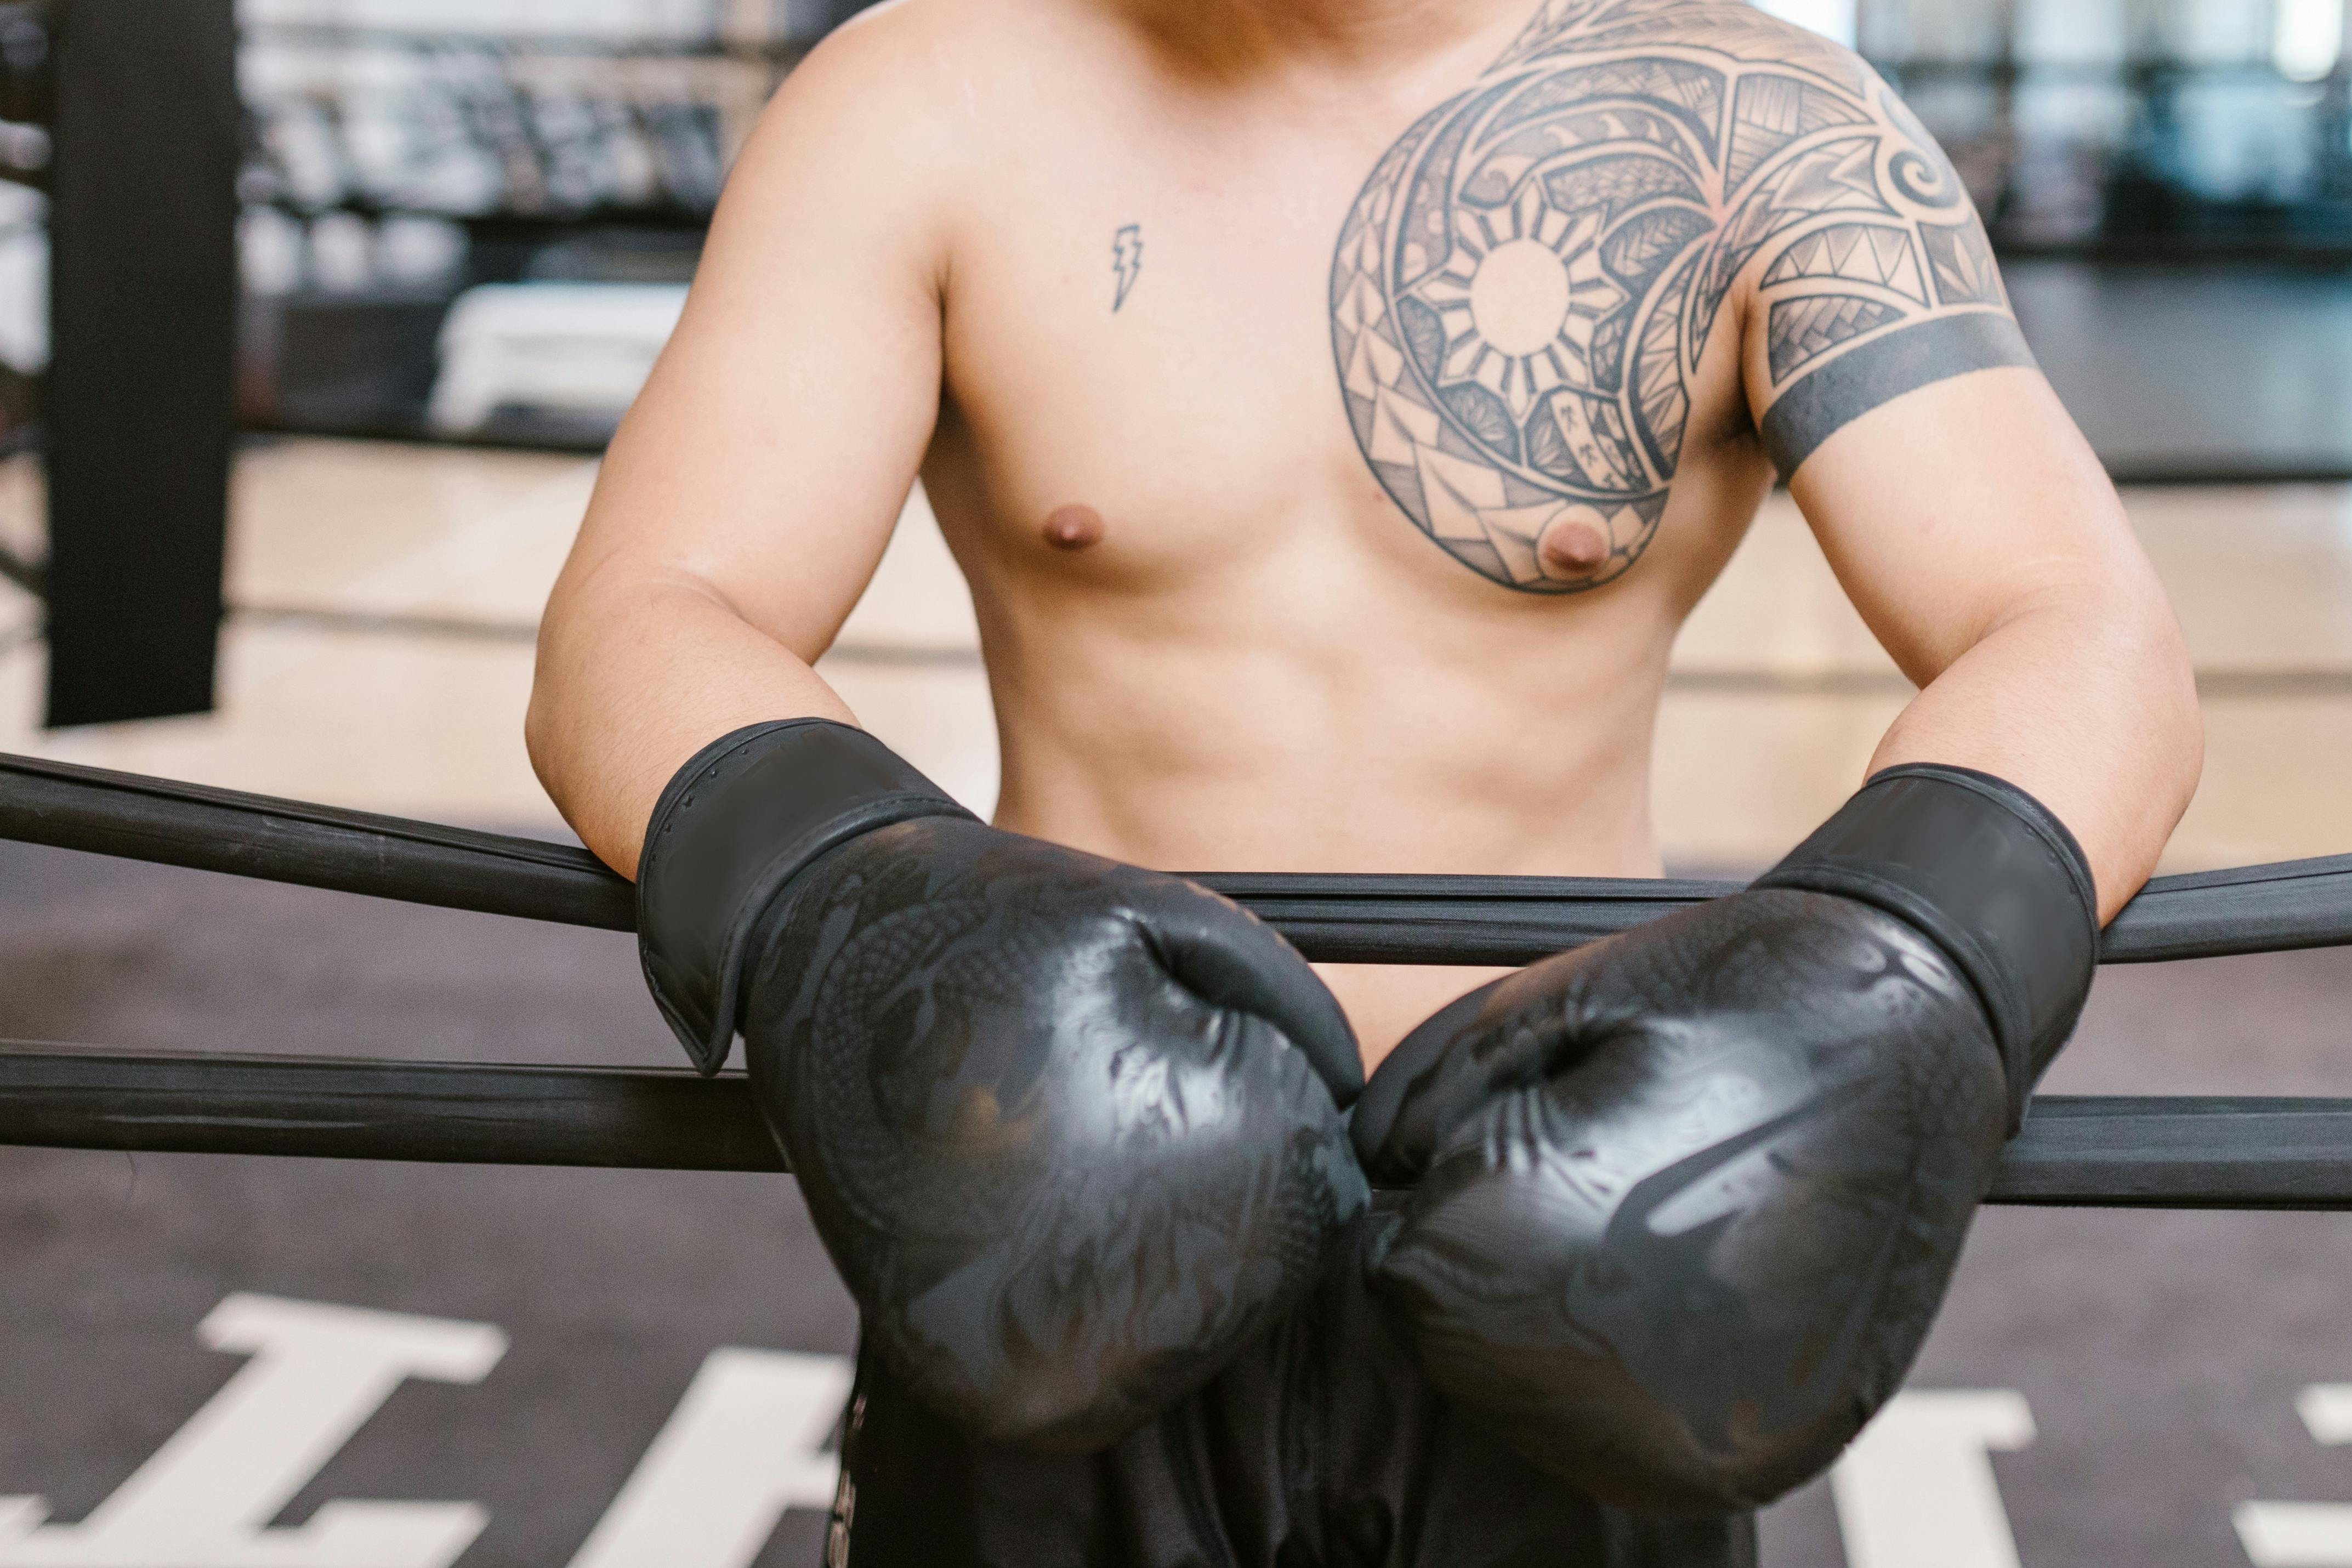 Old school boxing gloves tattoo by ovumink on DeviantArt